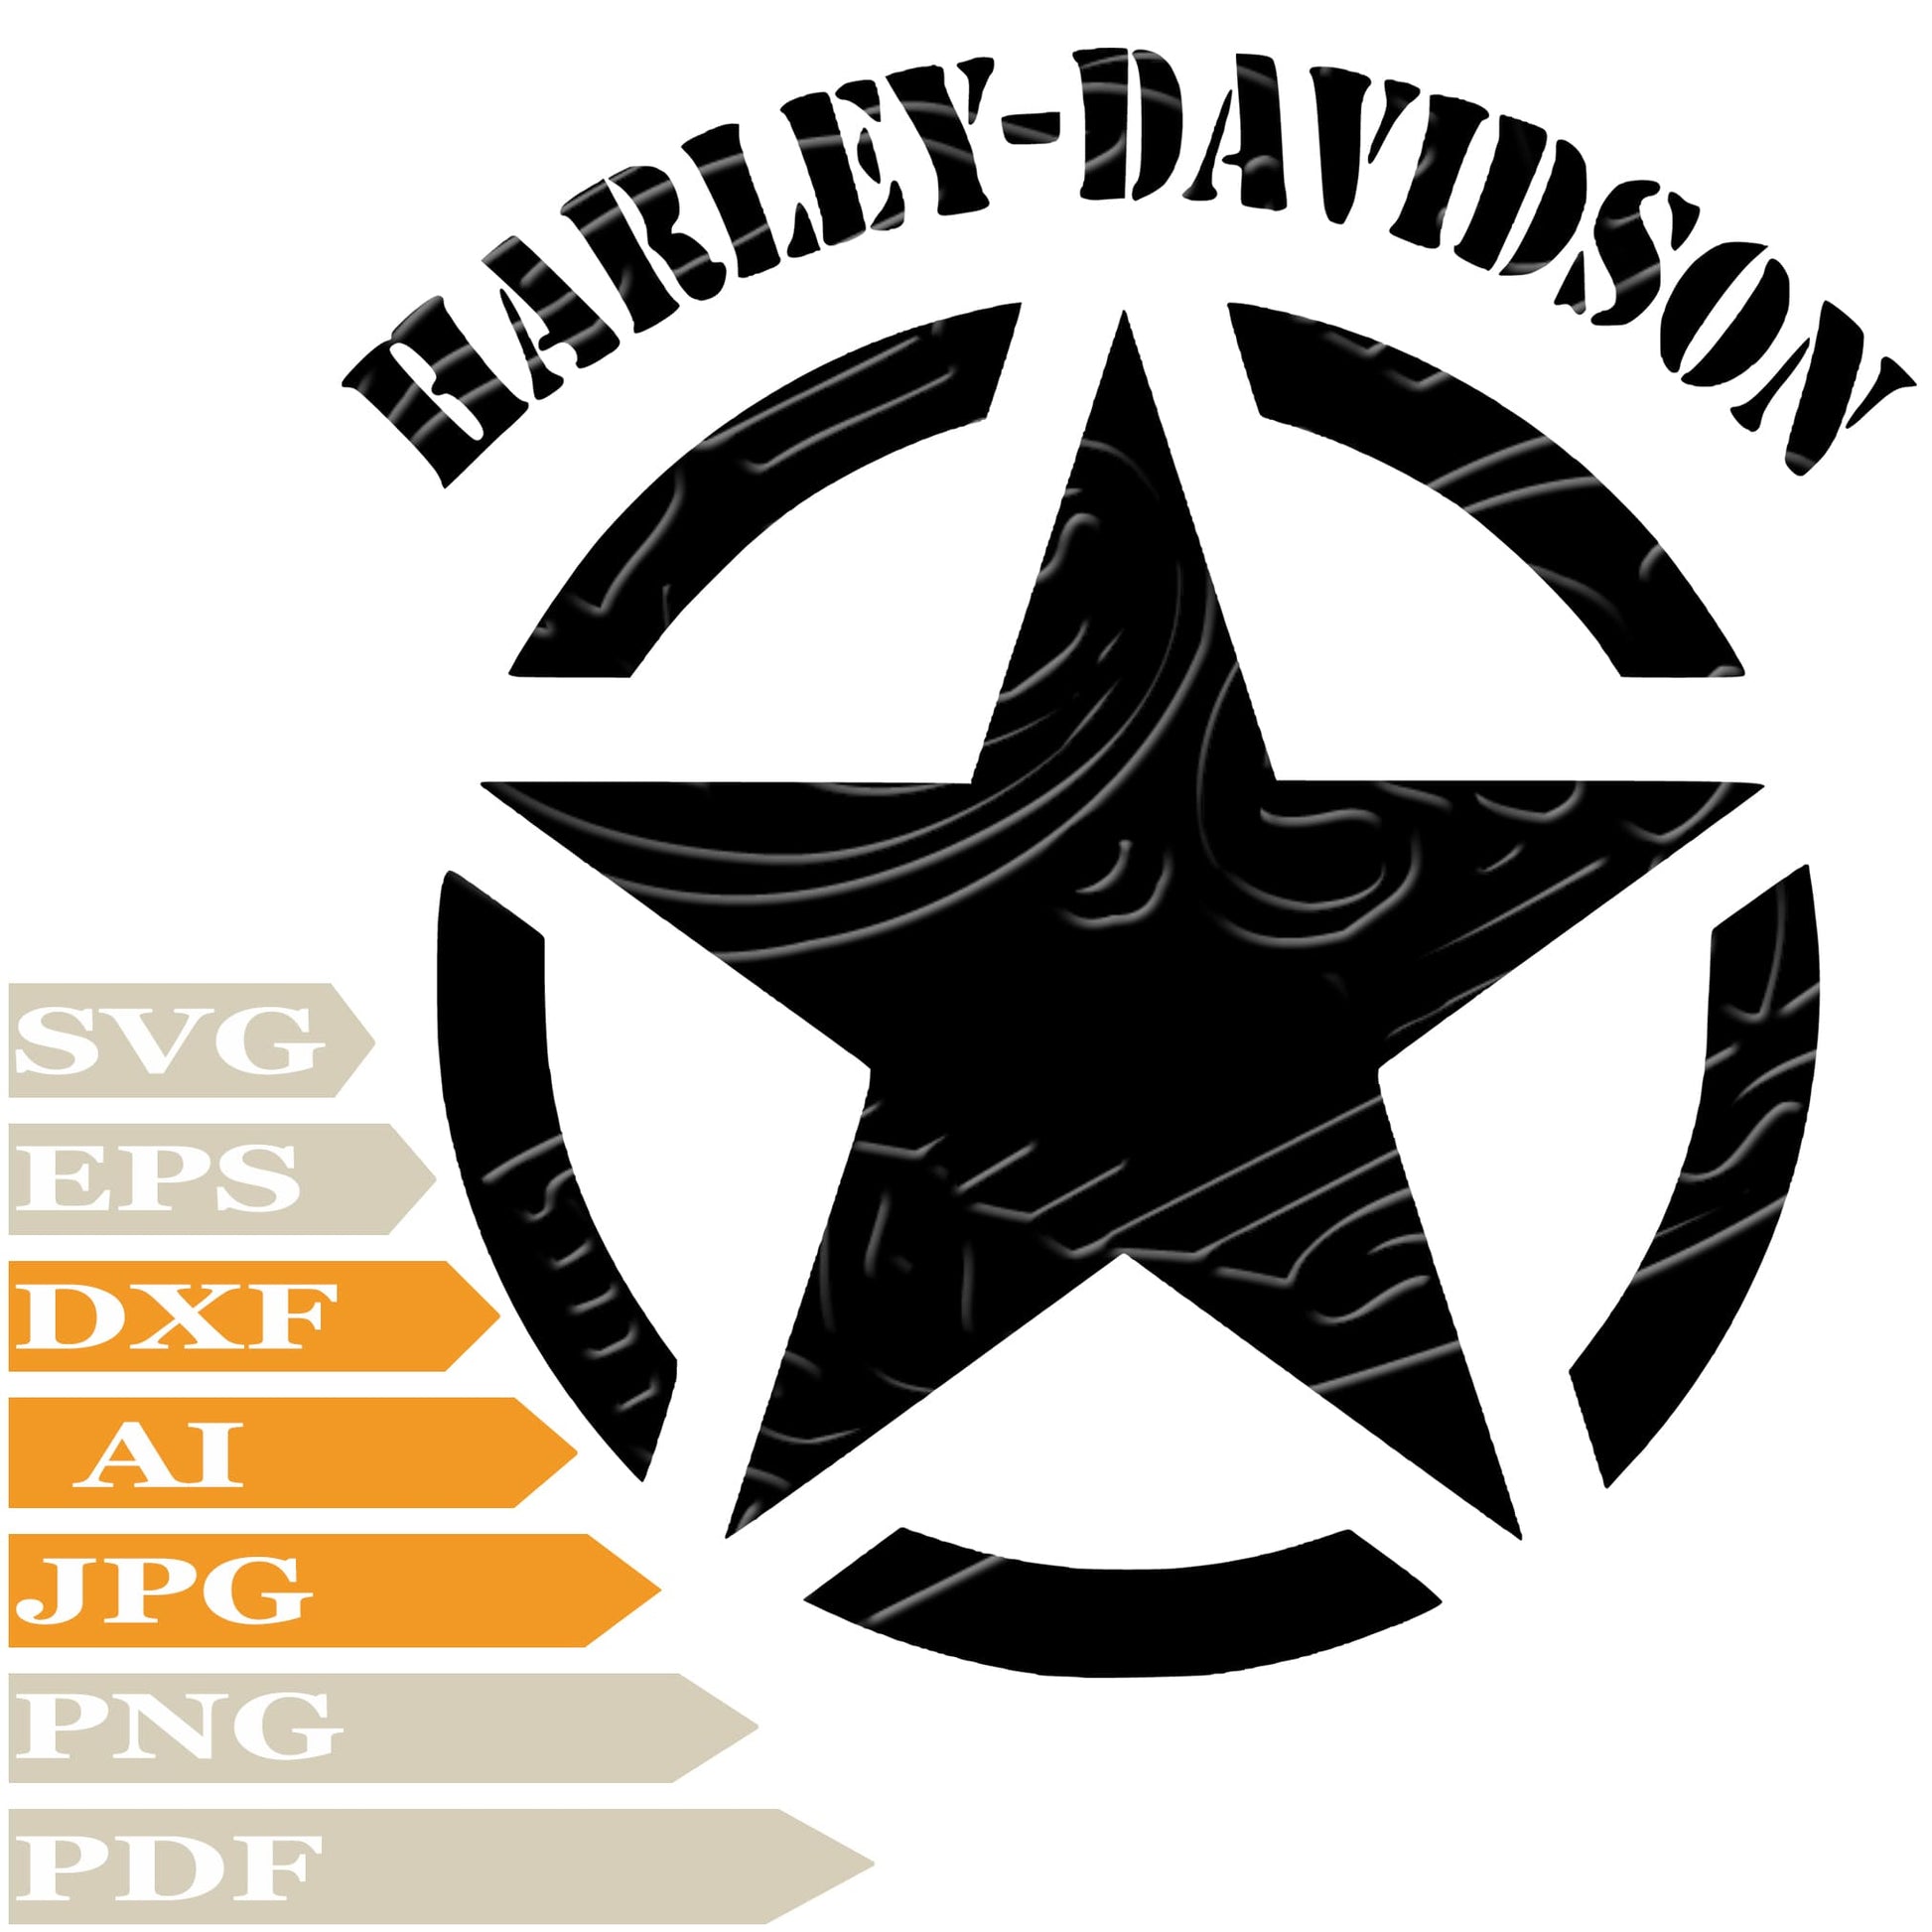 Star Harley Davidson, Harley Davidson Logo Svg File, Image Cut, Png, For Tattoo, Silhouette, Digital Vector Download, Cut File, Clipart, For Cricut